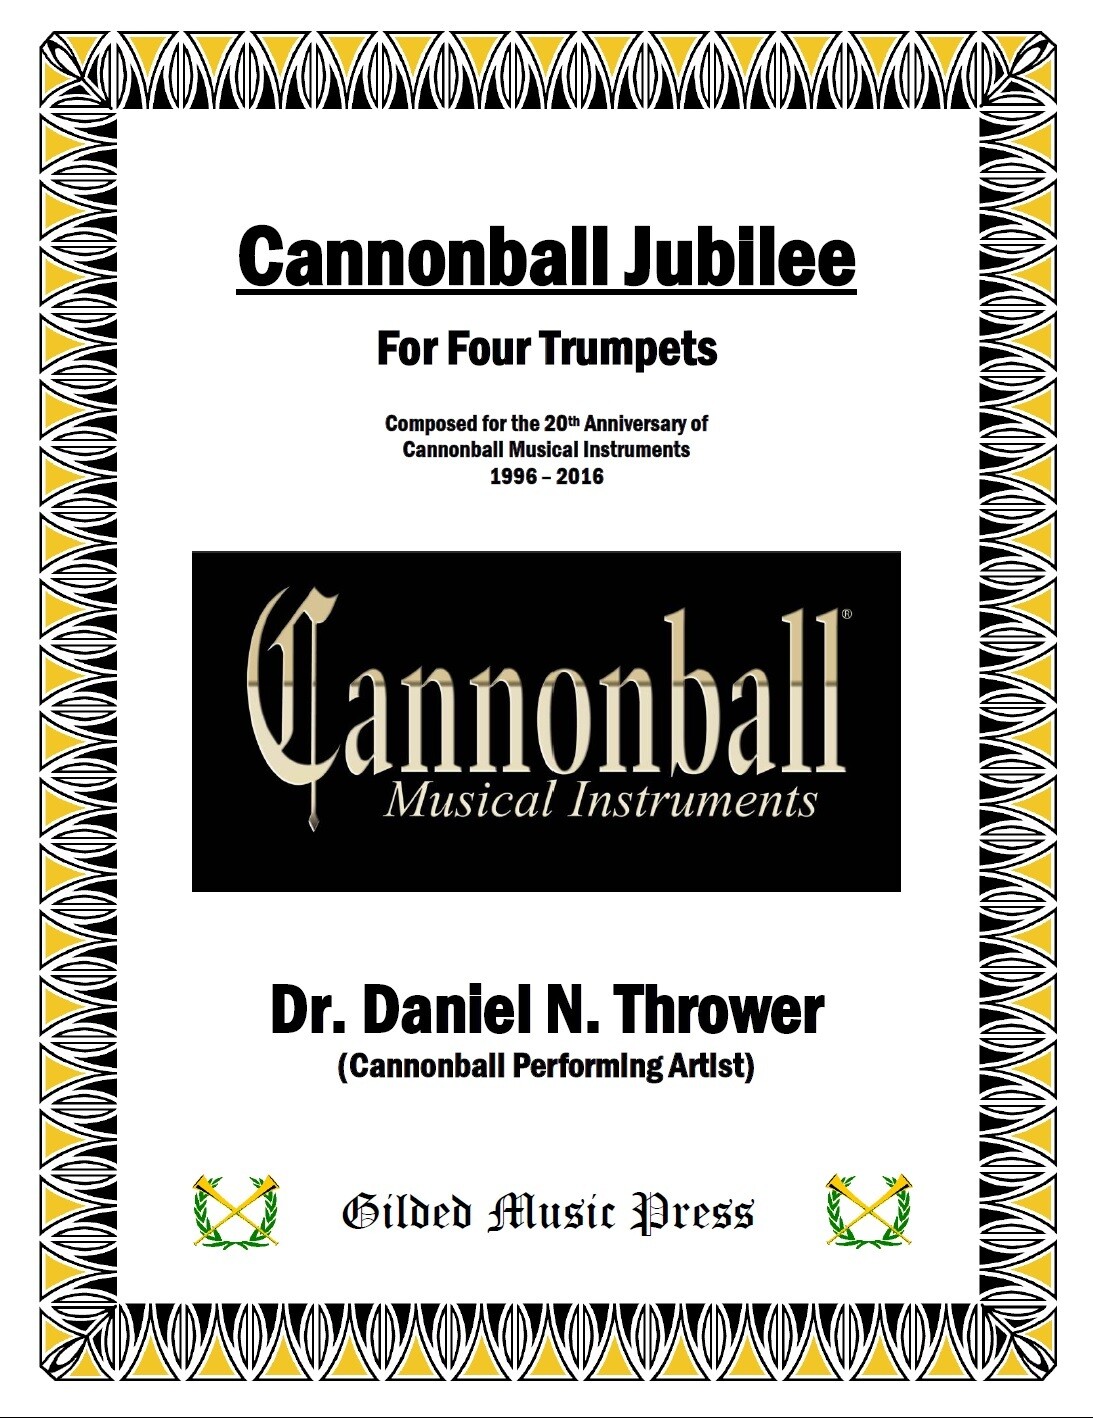 GMP 2041: Cannonball Jubilee (Trumpet Quartet), Dr. Daniel Thrower